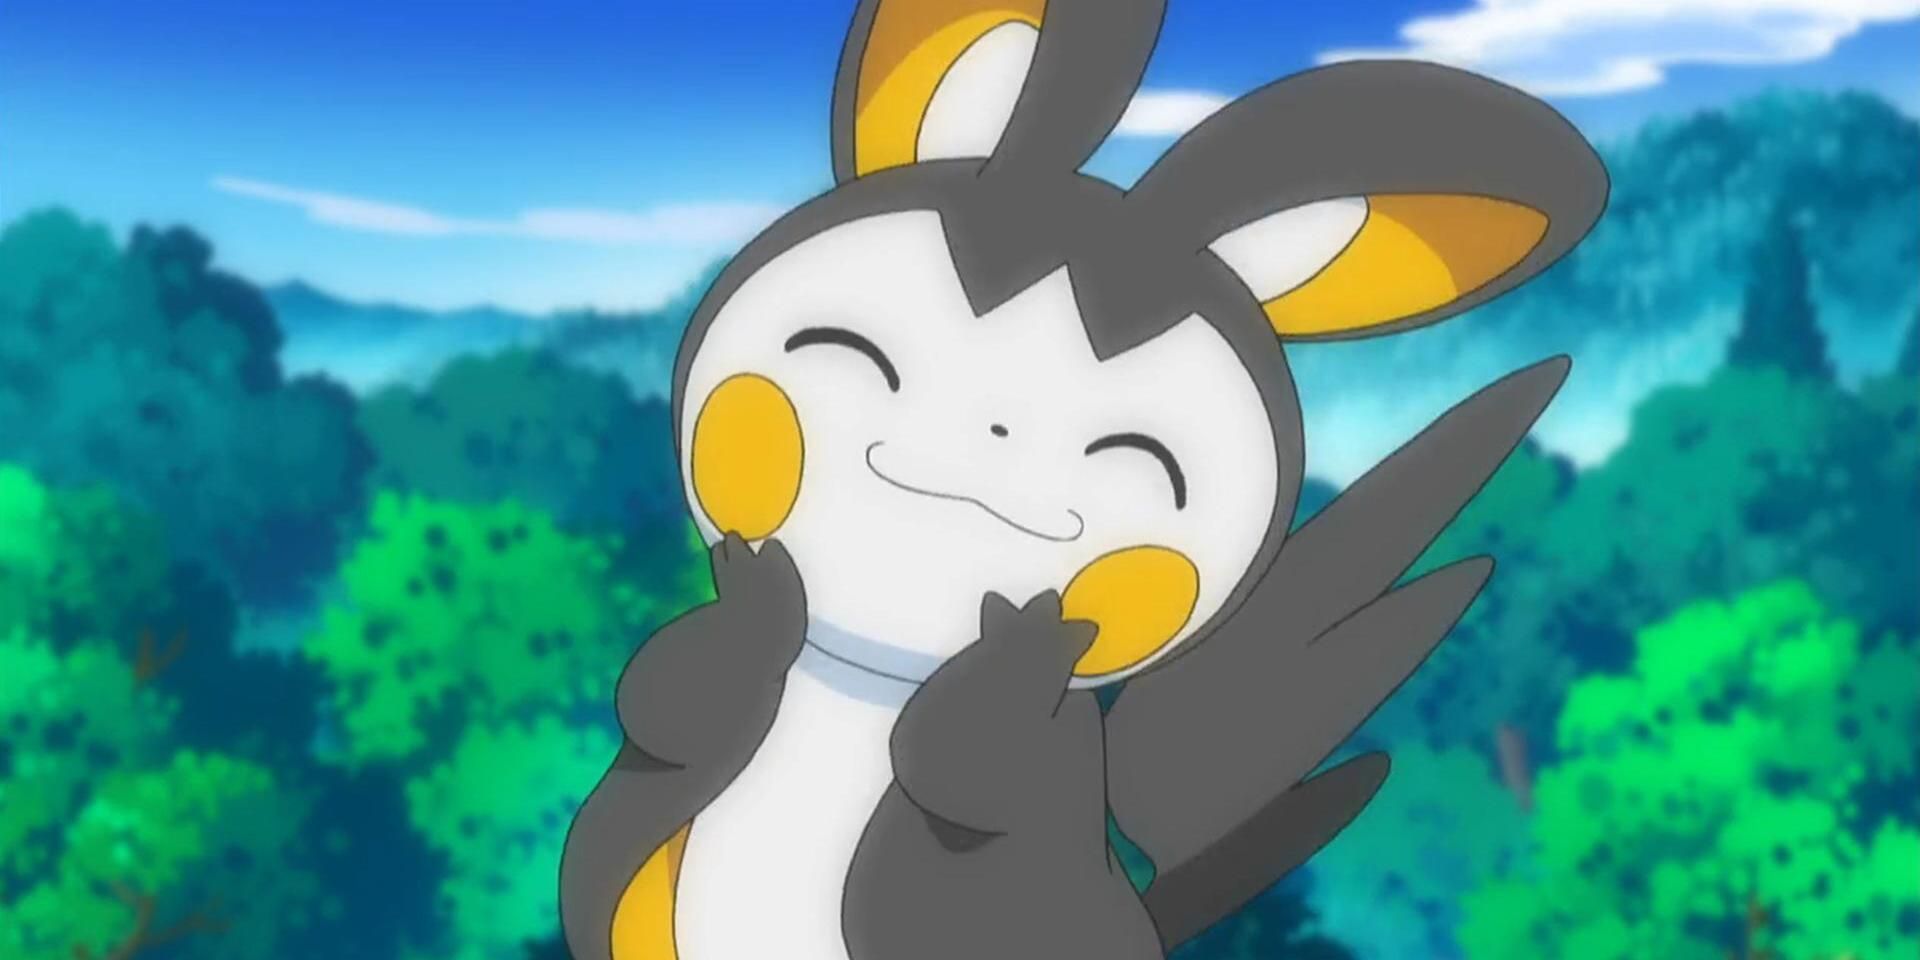 A still from the Pokémon anime featuring Emolga, the Sky Squirrel Pokémon